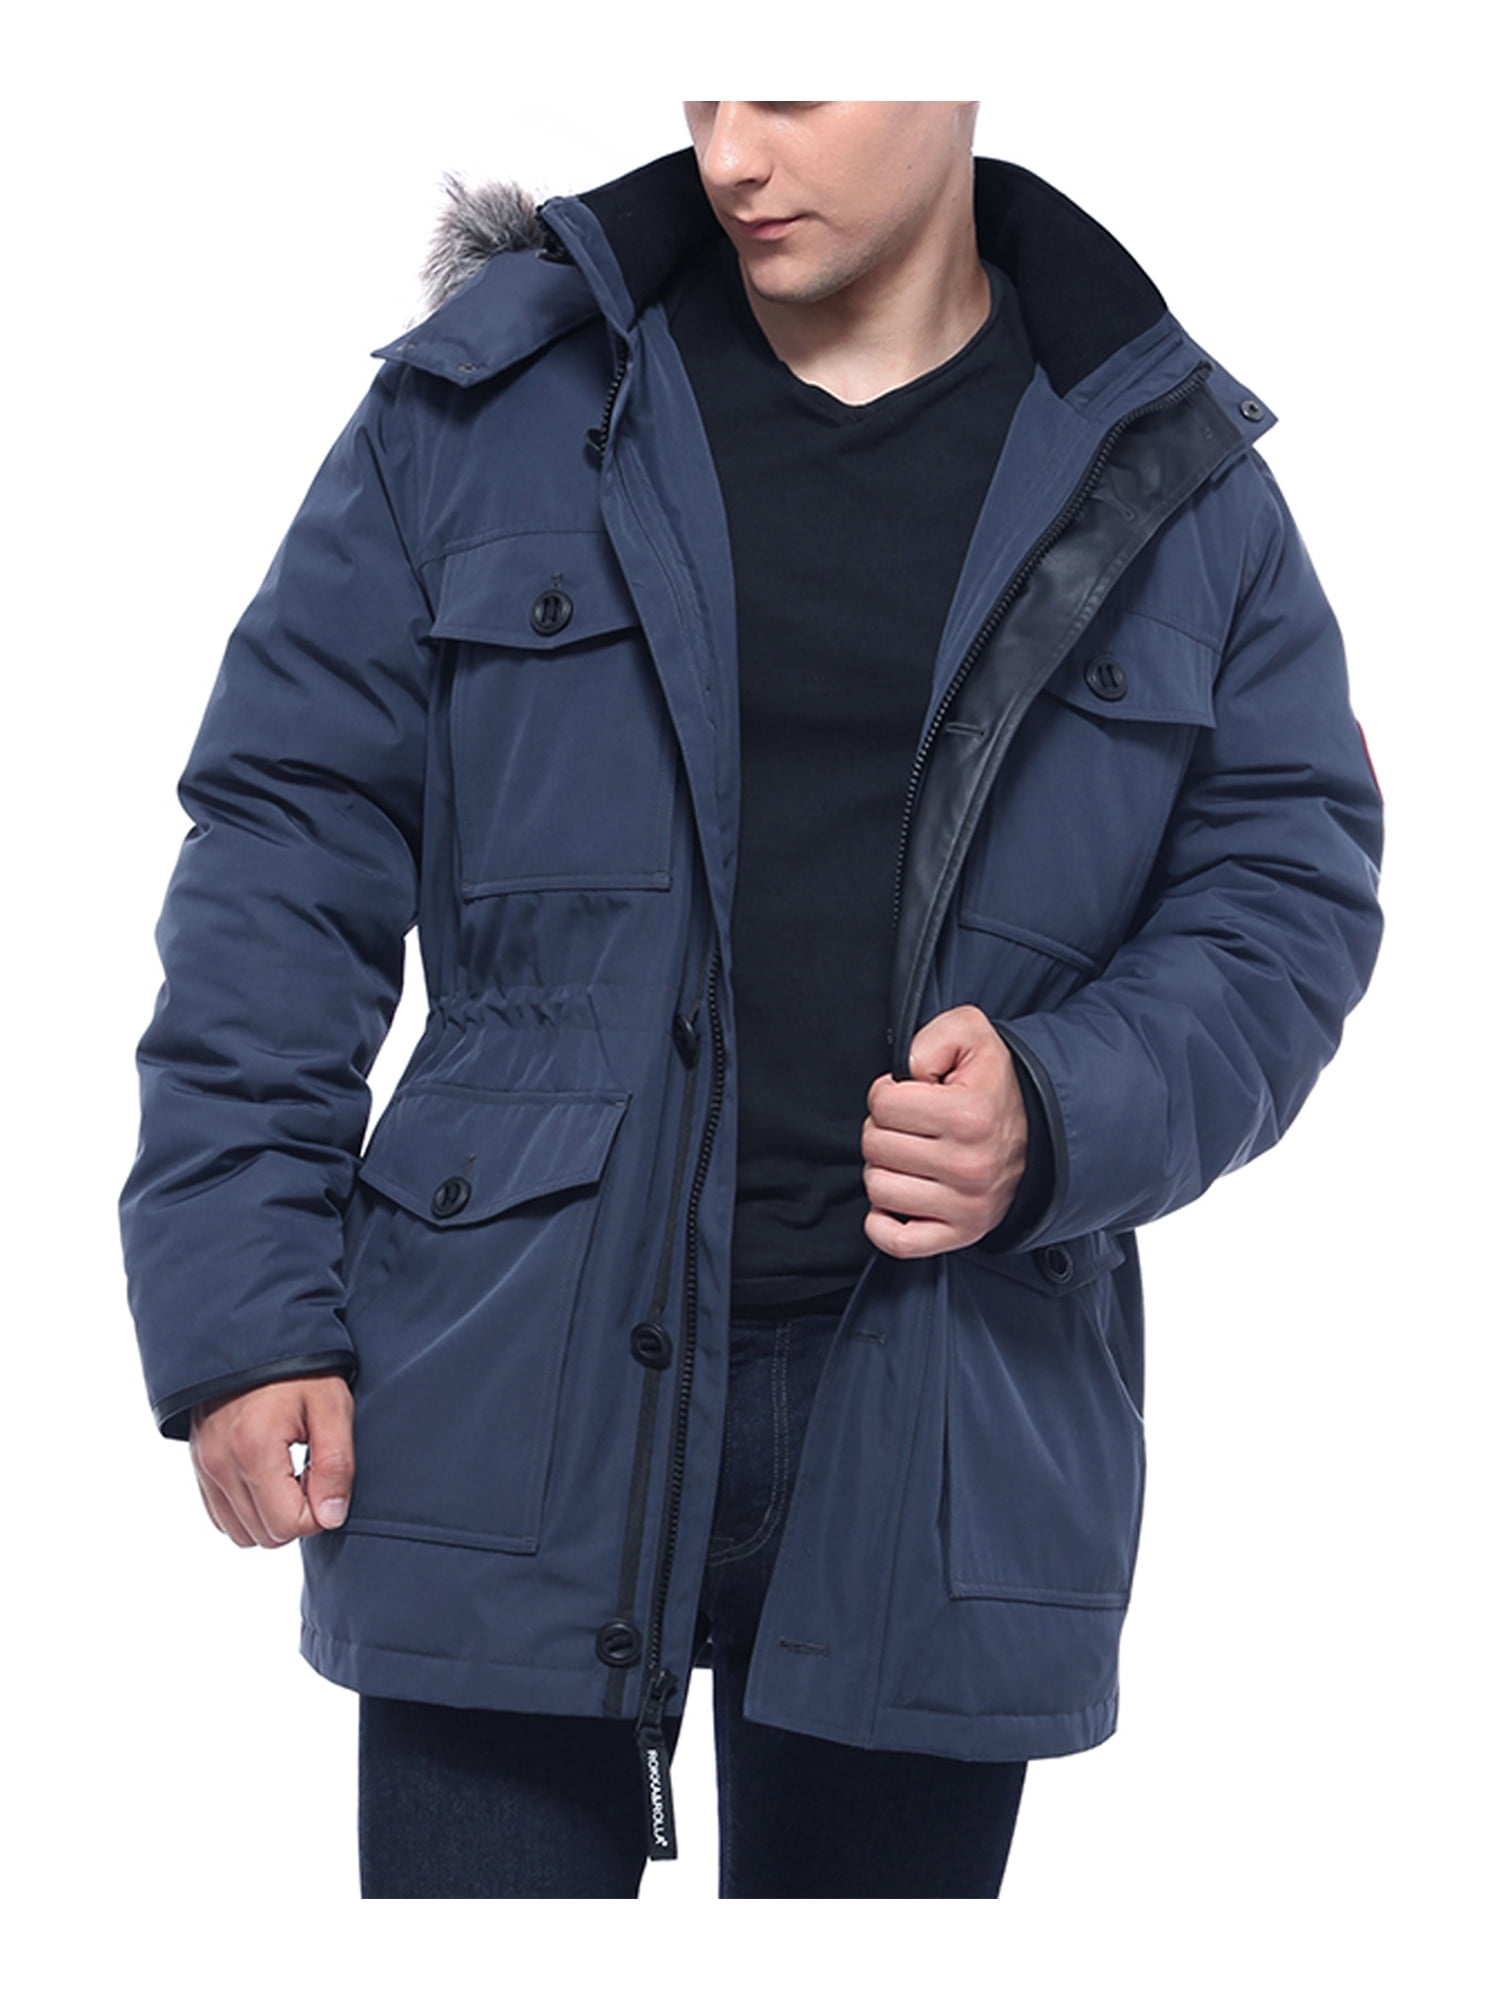 Loqono Winter Men Casual Warm Cotton Jacket Hooded Jacket Parker Coat 